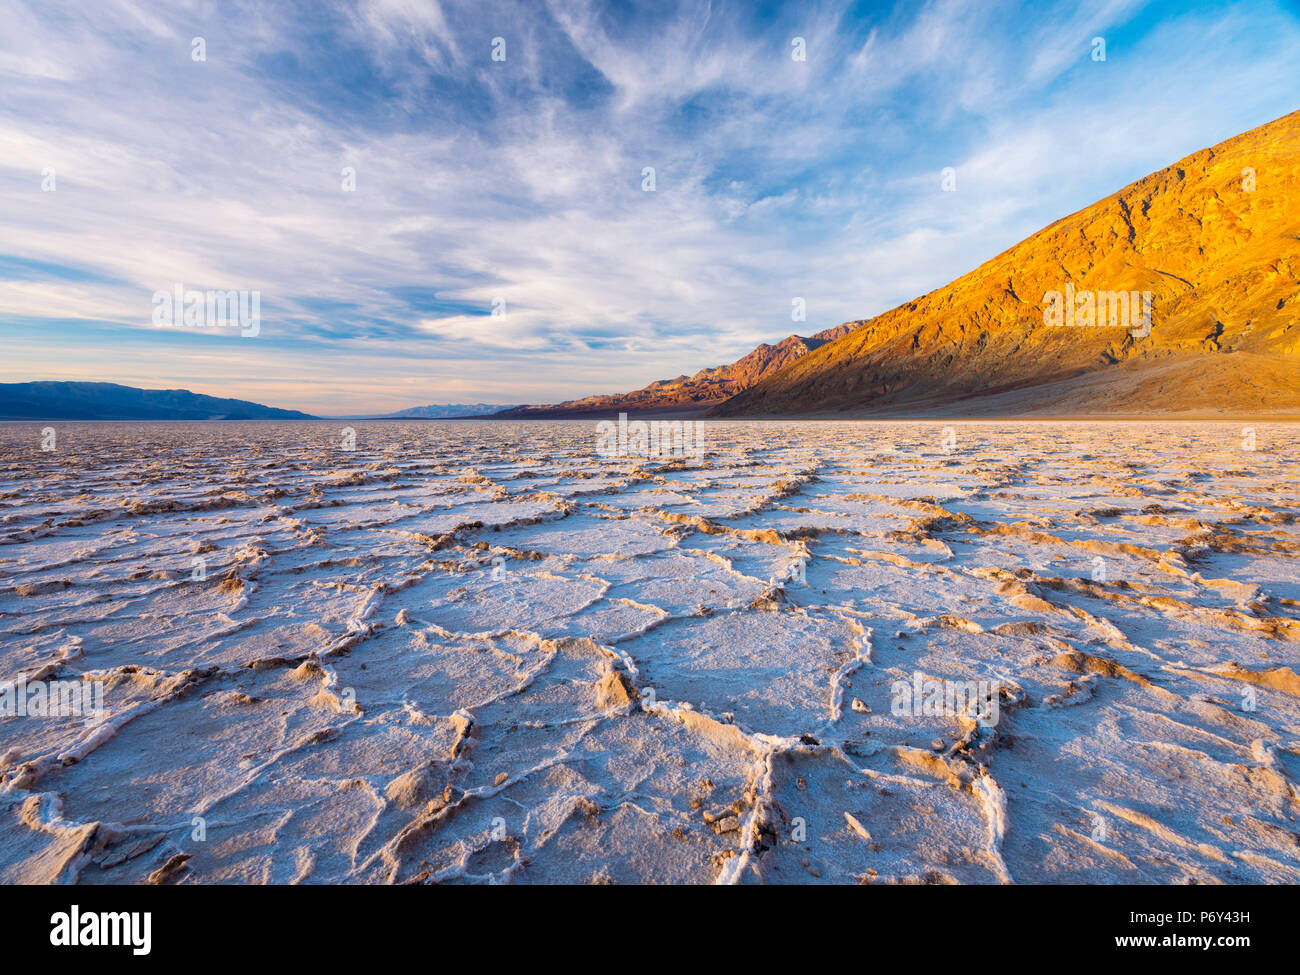 USA, California, Death Valley National Park, Badwater Basin, lowest point in North America, salt crust broken into hexagonal pressure ridges Stock Photo